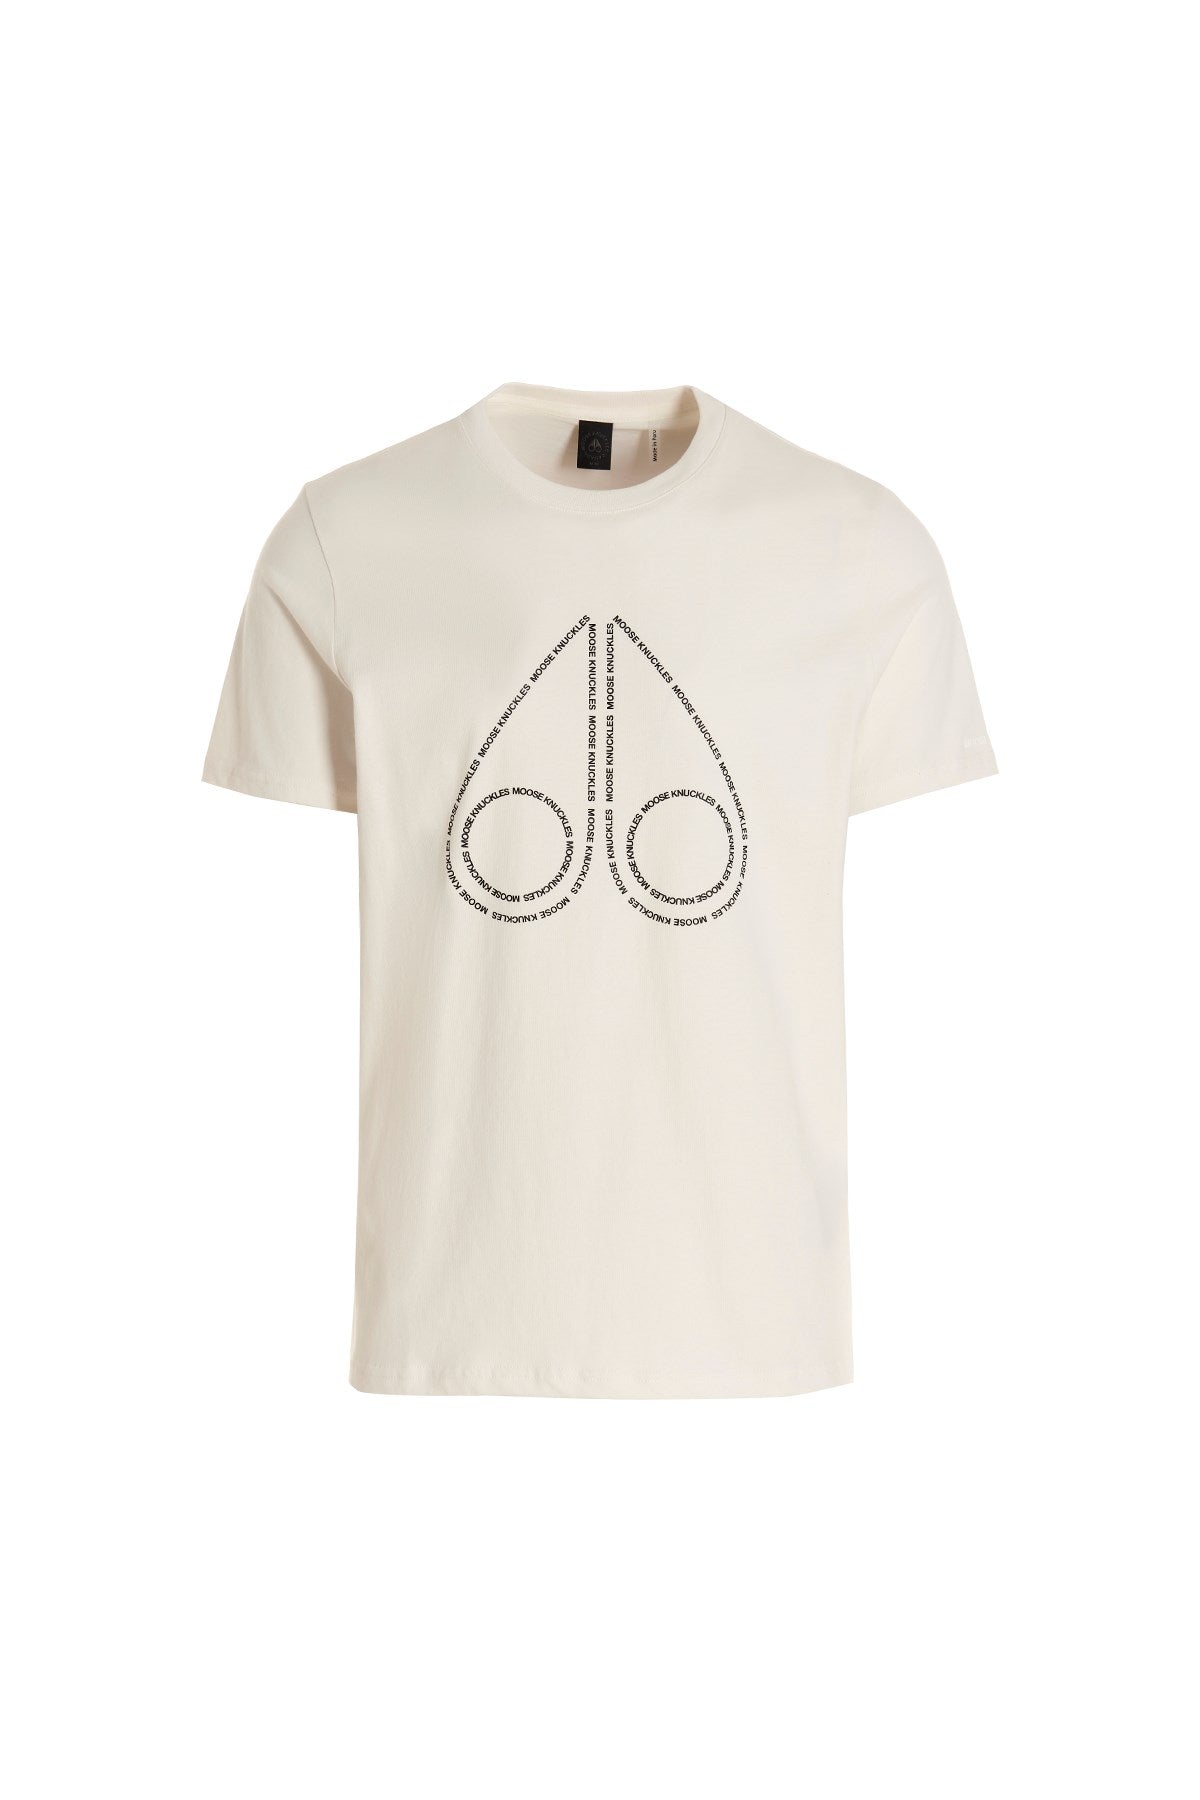 Moose Knuckles Gerrard T-Shirt - 1103 Plaster - Escape Menswear